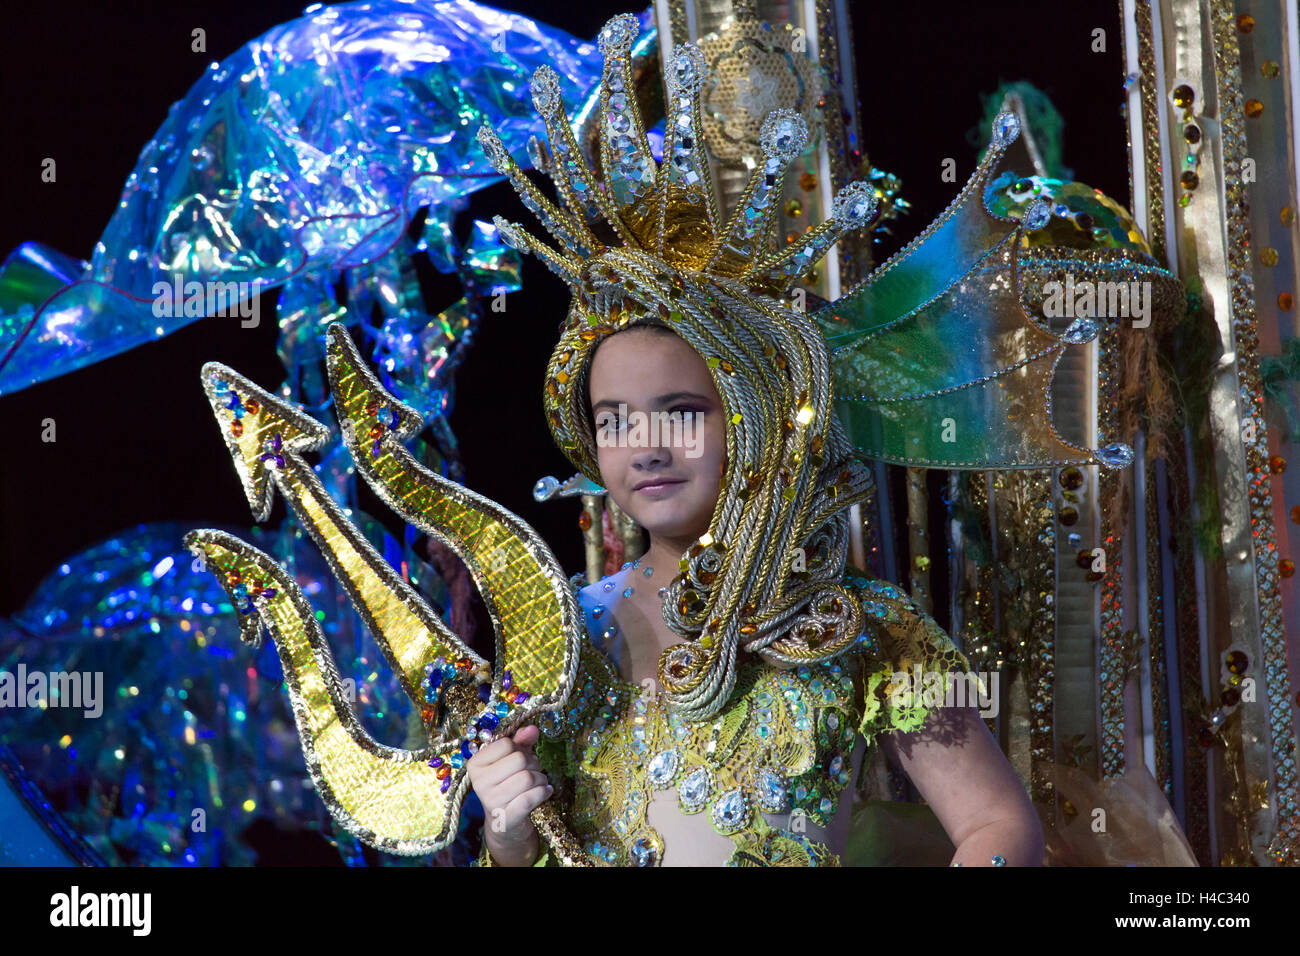 Reina Del Carnaval Fotos e Imágenes de stock - Alamy